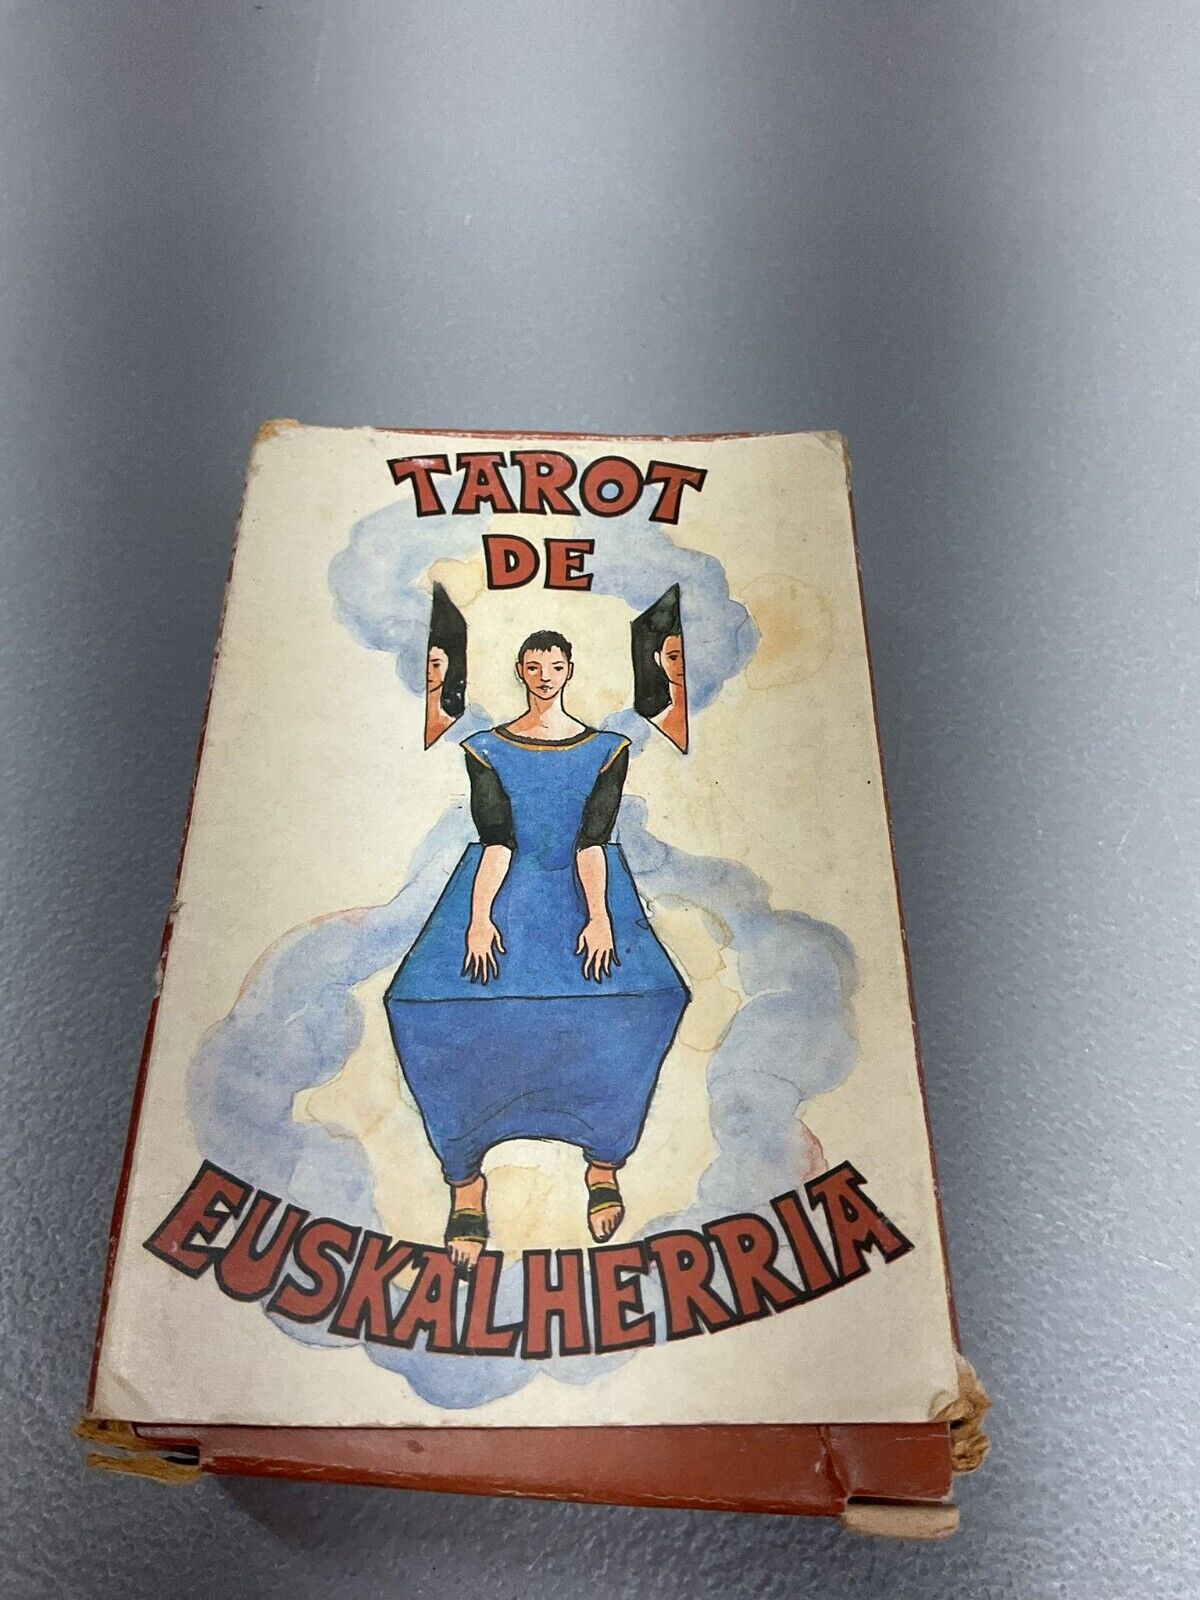 Vintage Tarot de Euskalherria Tarot Cards Collection